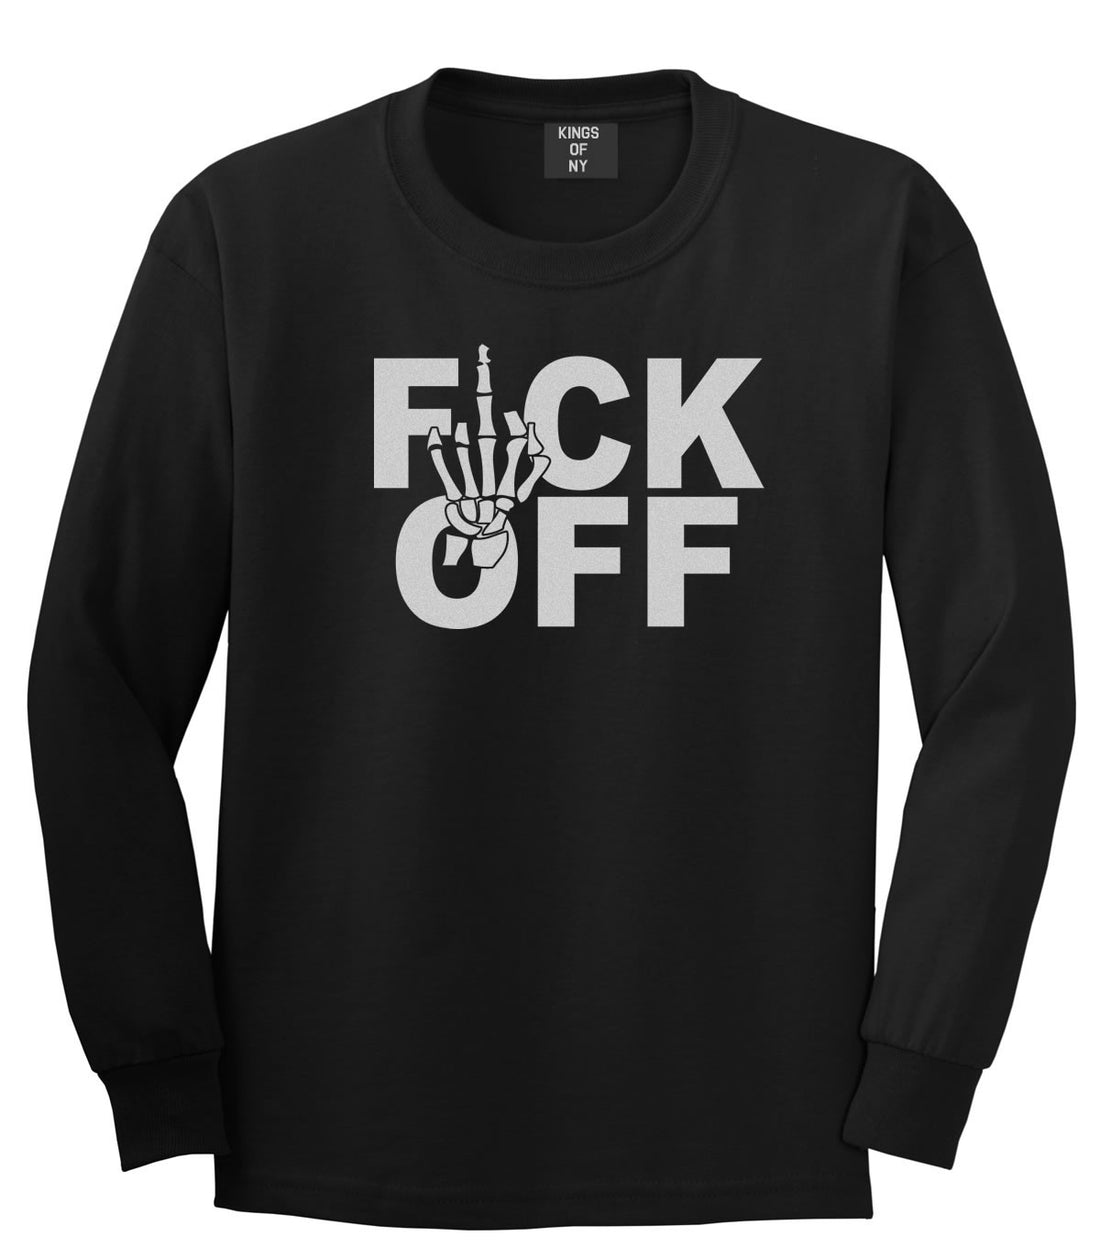 FCK OFF Skeleton Hand Boys Kids Long Sleeve T-Shirt in Black by Kings Of NY